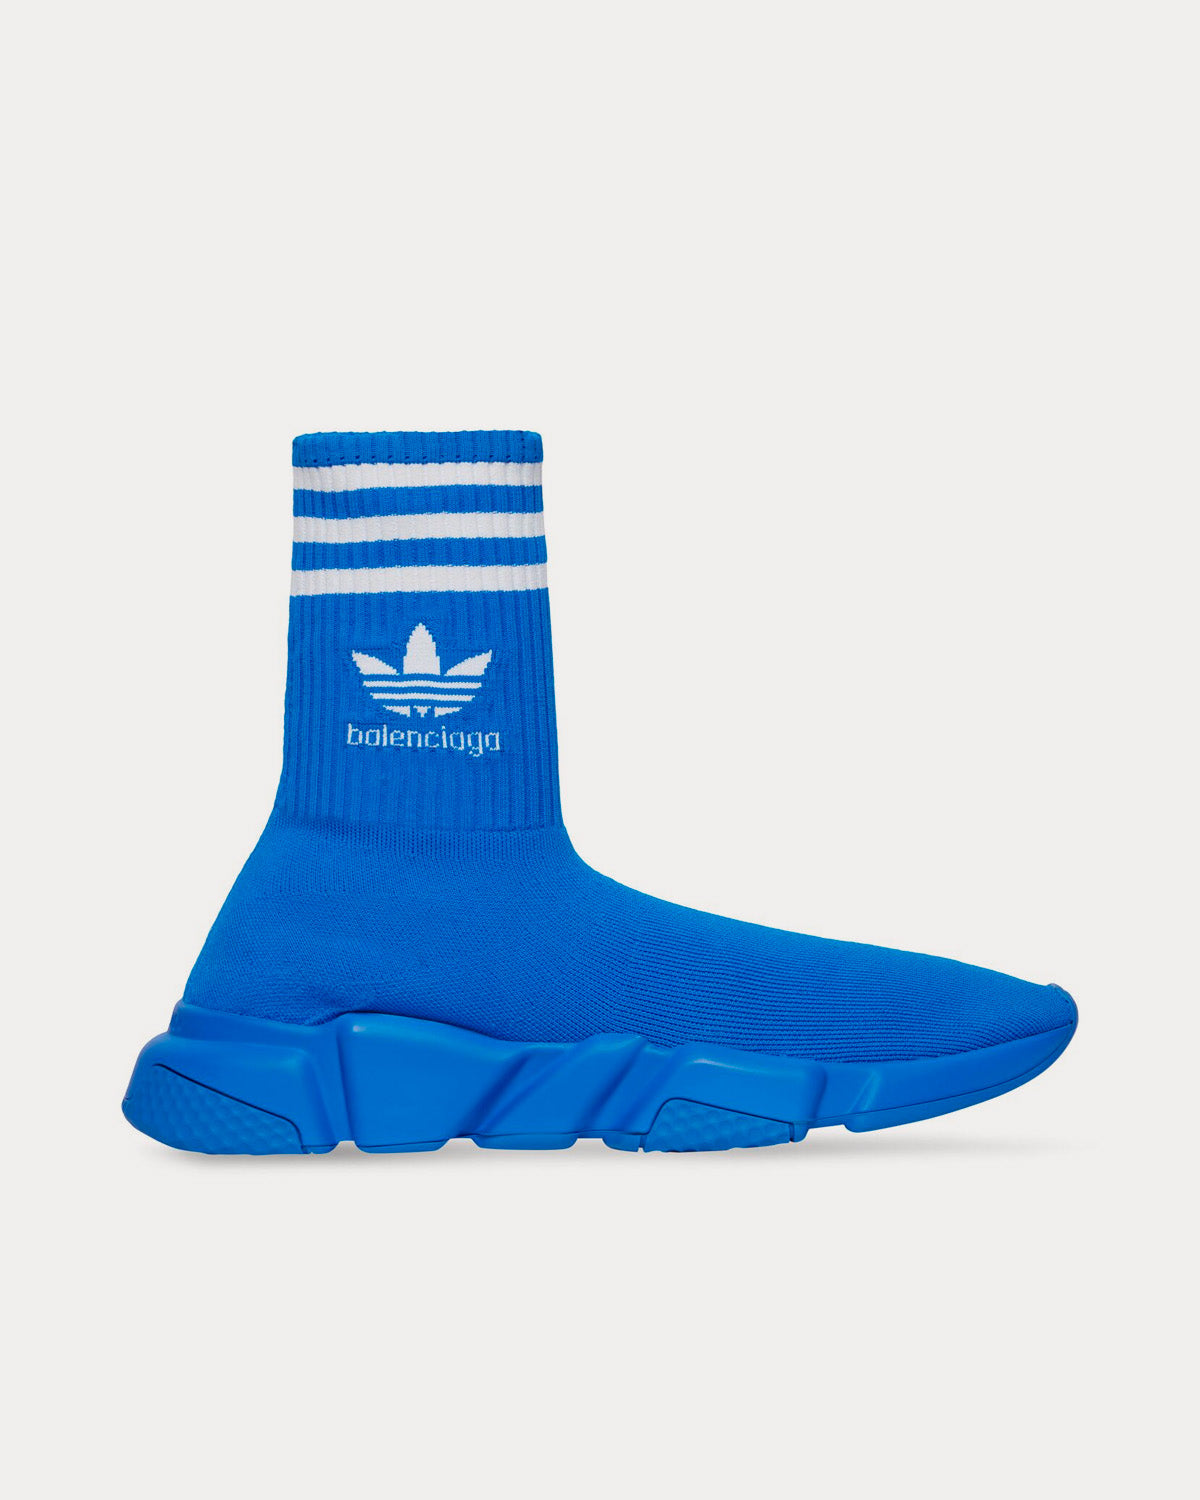 Balenciaga x Adidas - Speed Knit Blue High Top Sneakers